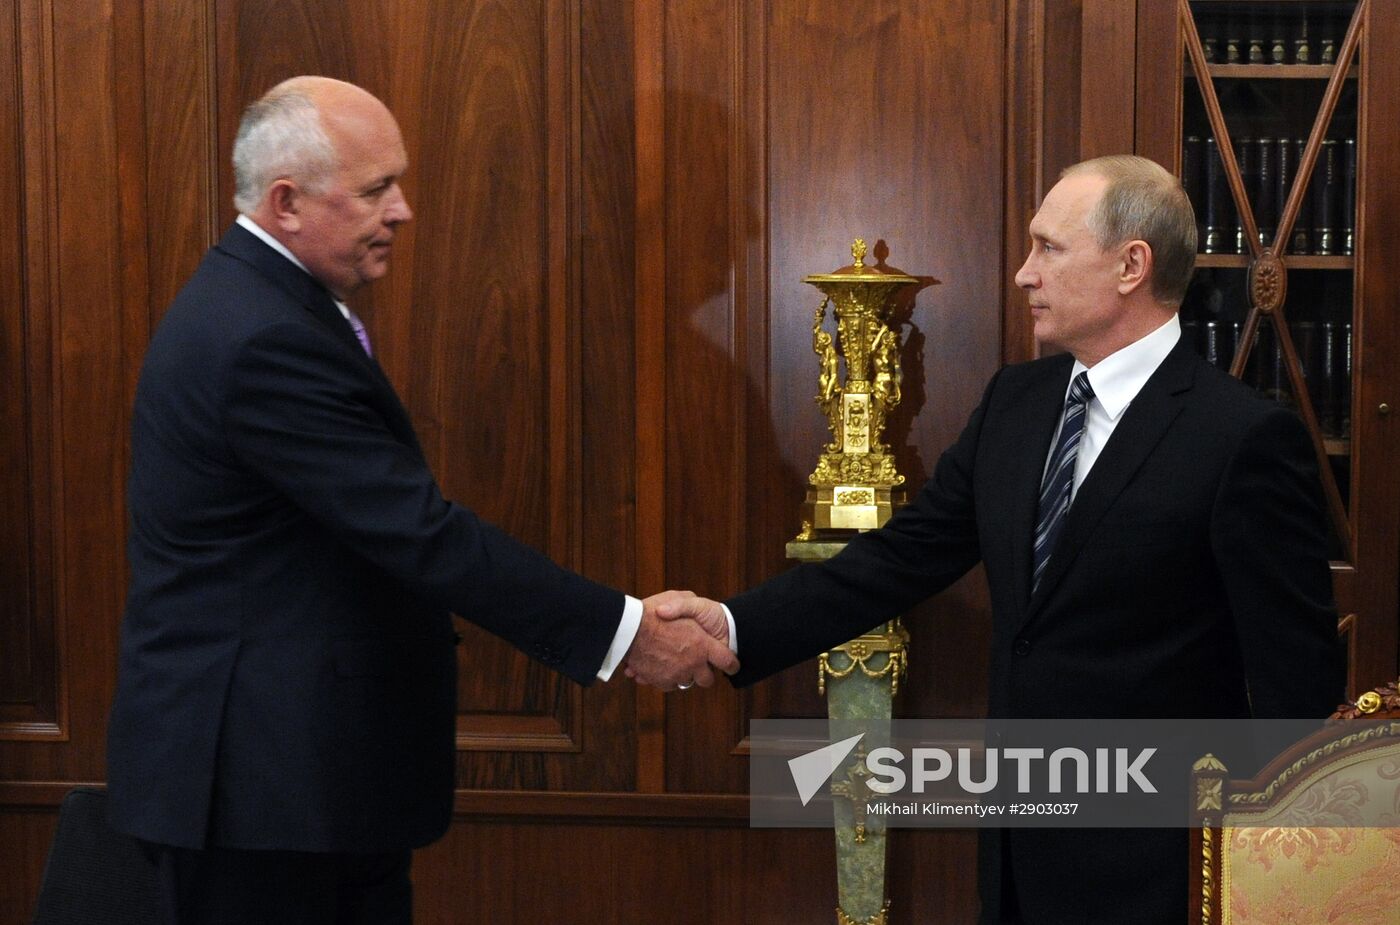 Russian President Vladimir Putin meets with Rostec Corporation CEO Sergei Chemezov